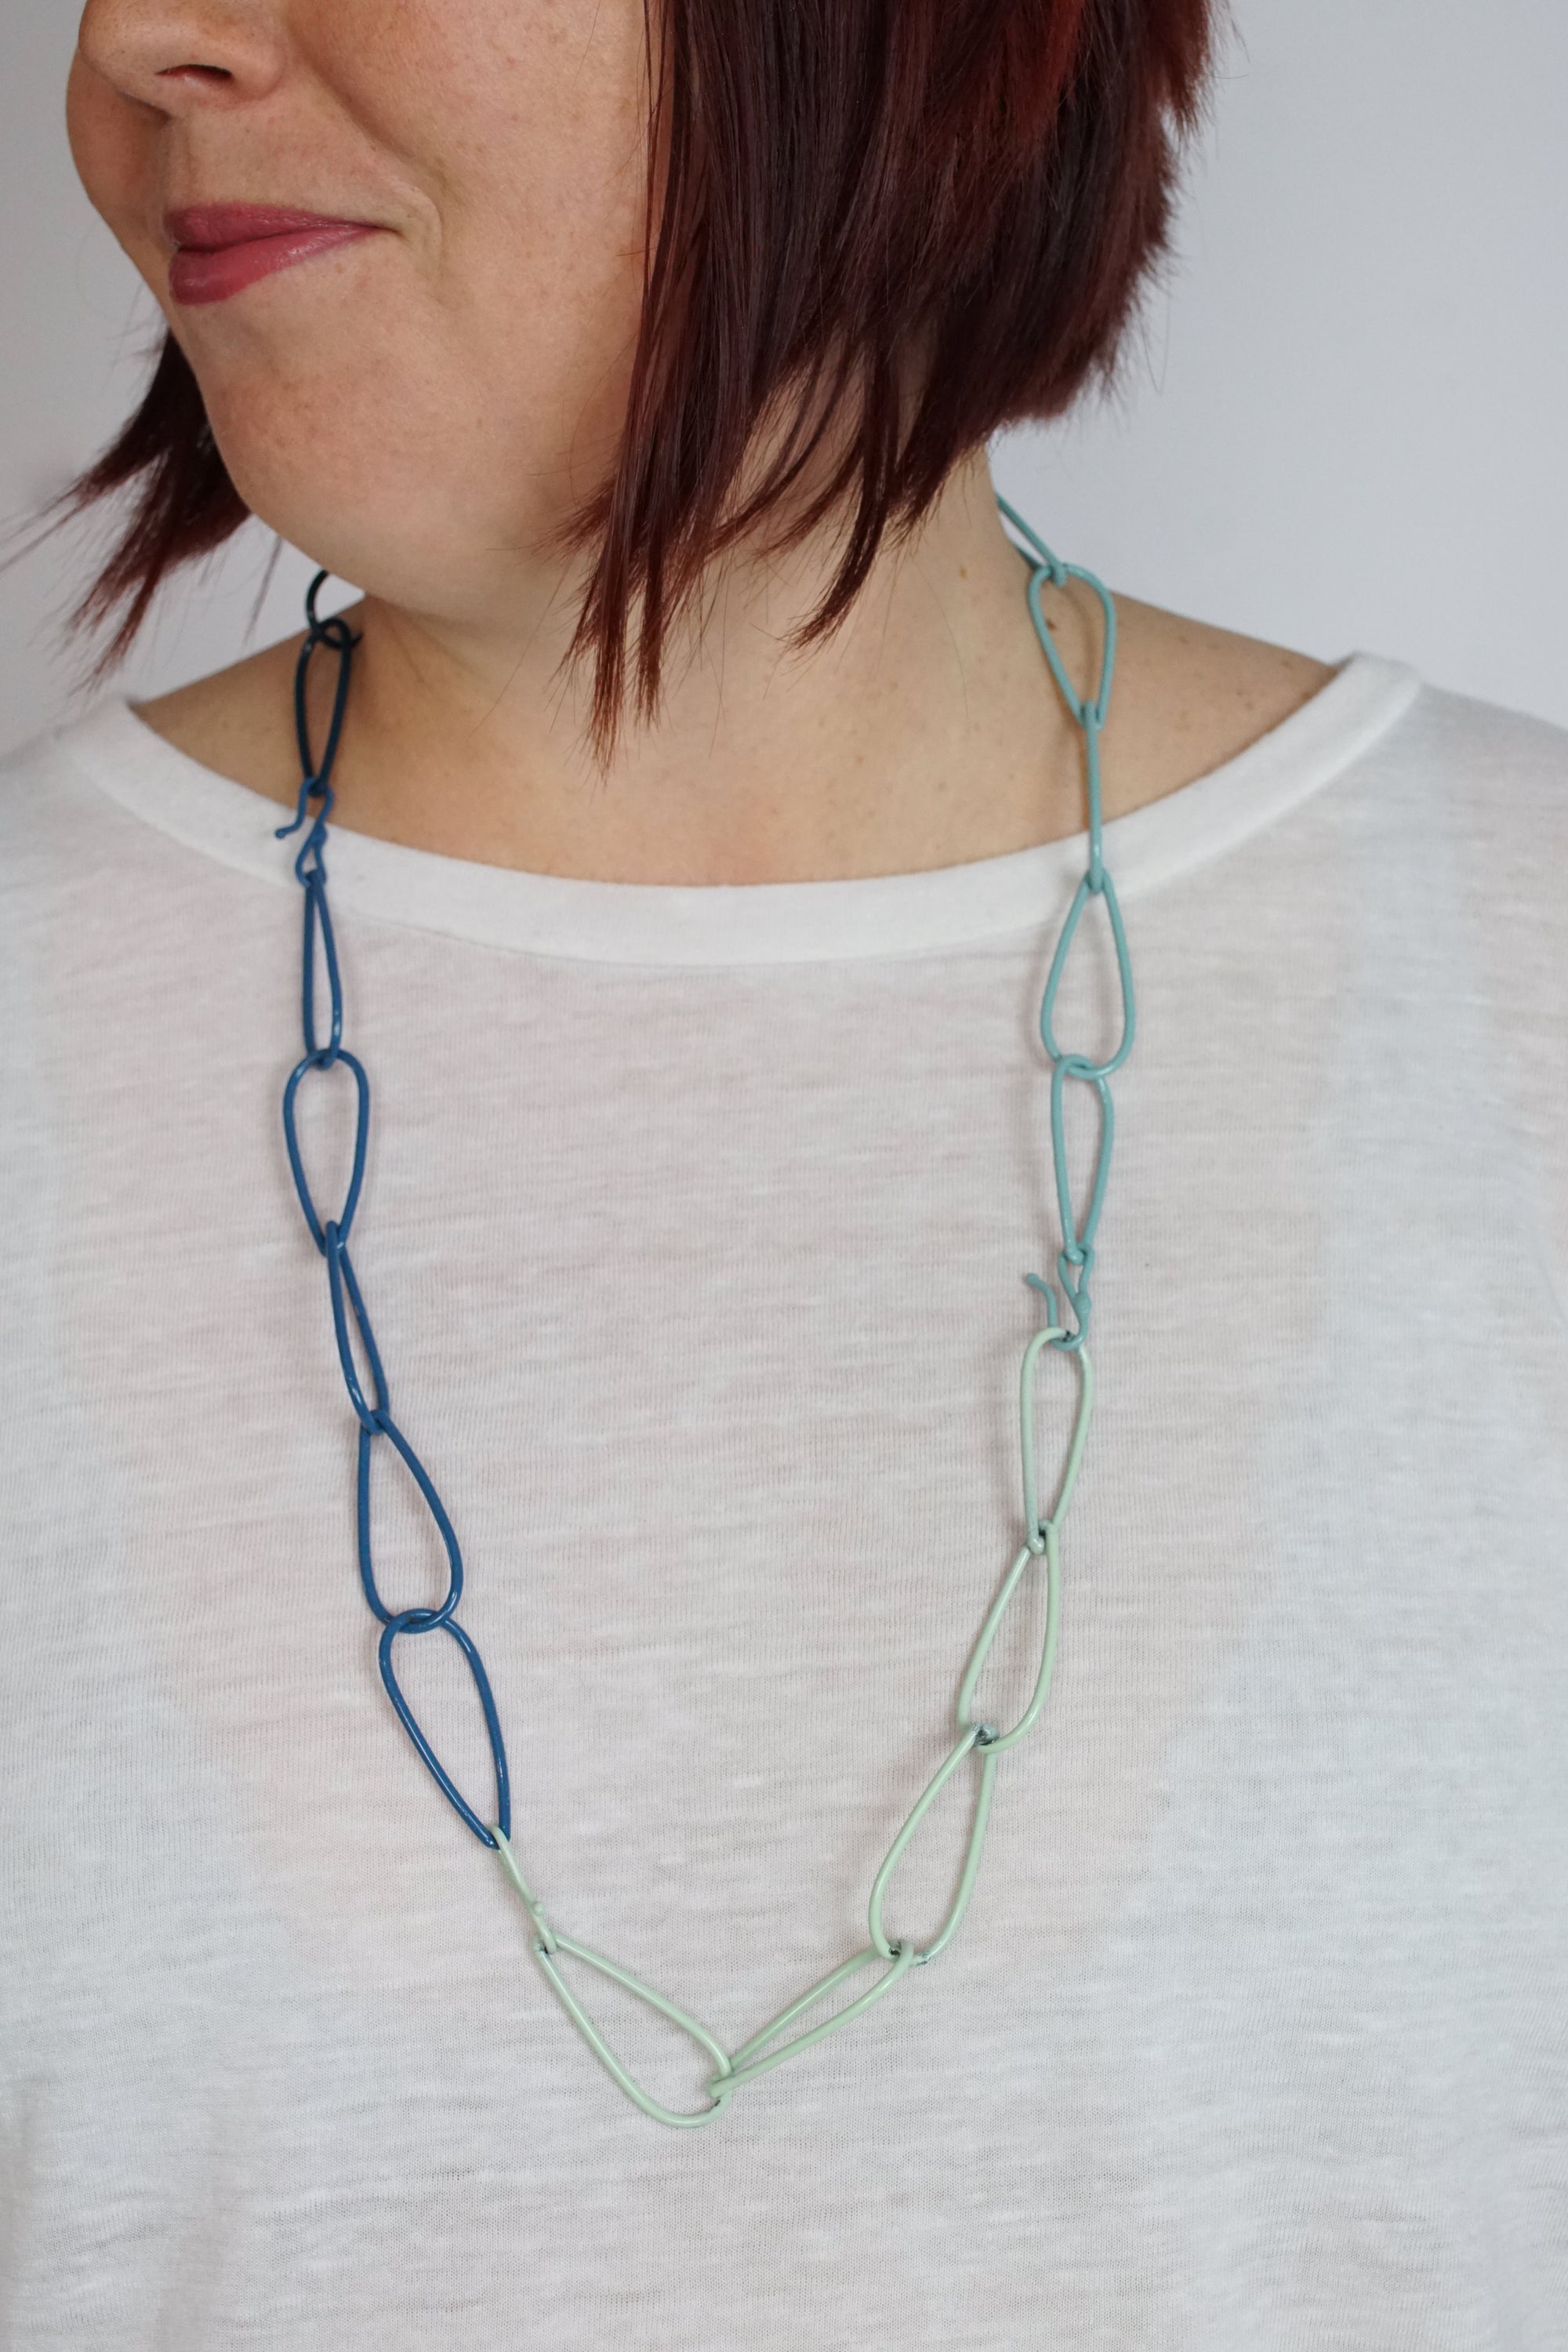 Long Modular Necklace in Deep Ocean, Azure Blue, Soft Mint, Faded Teal